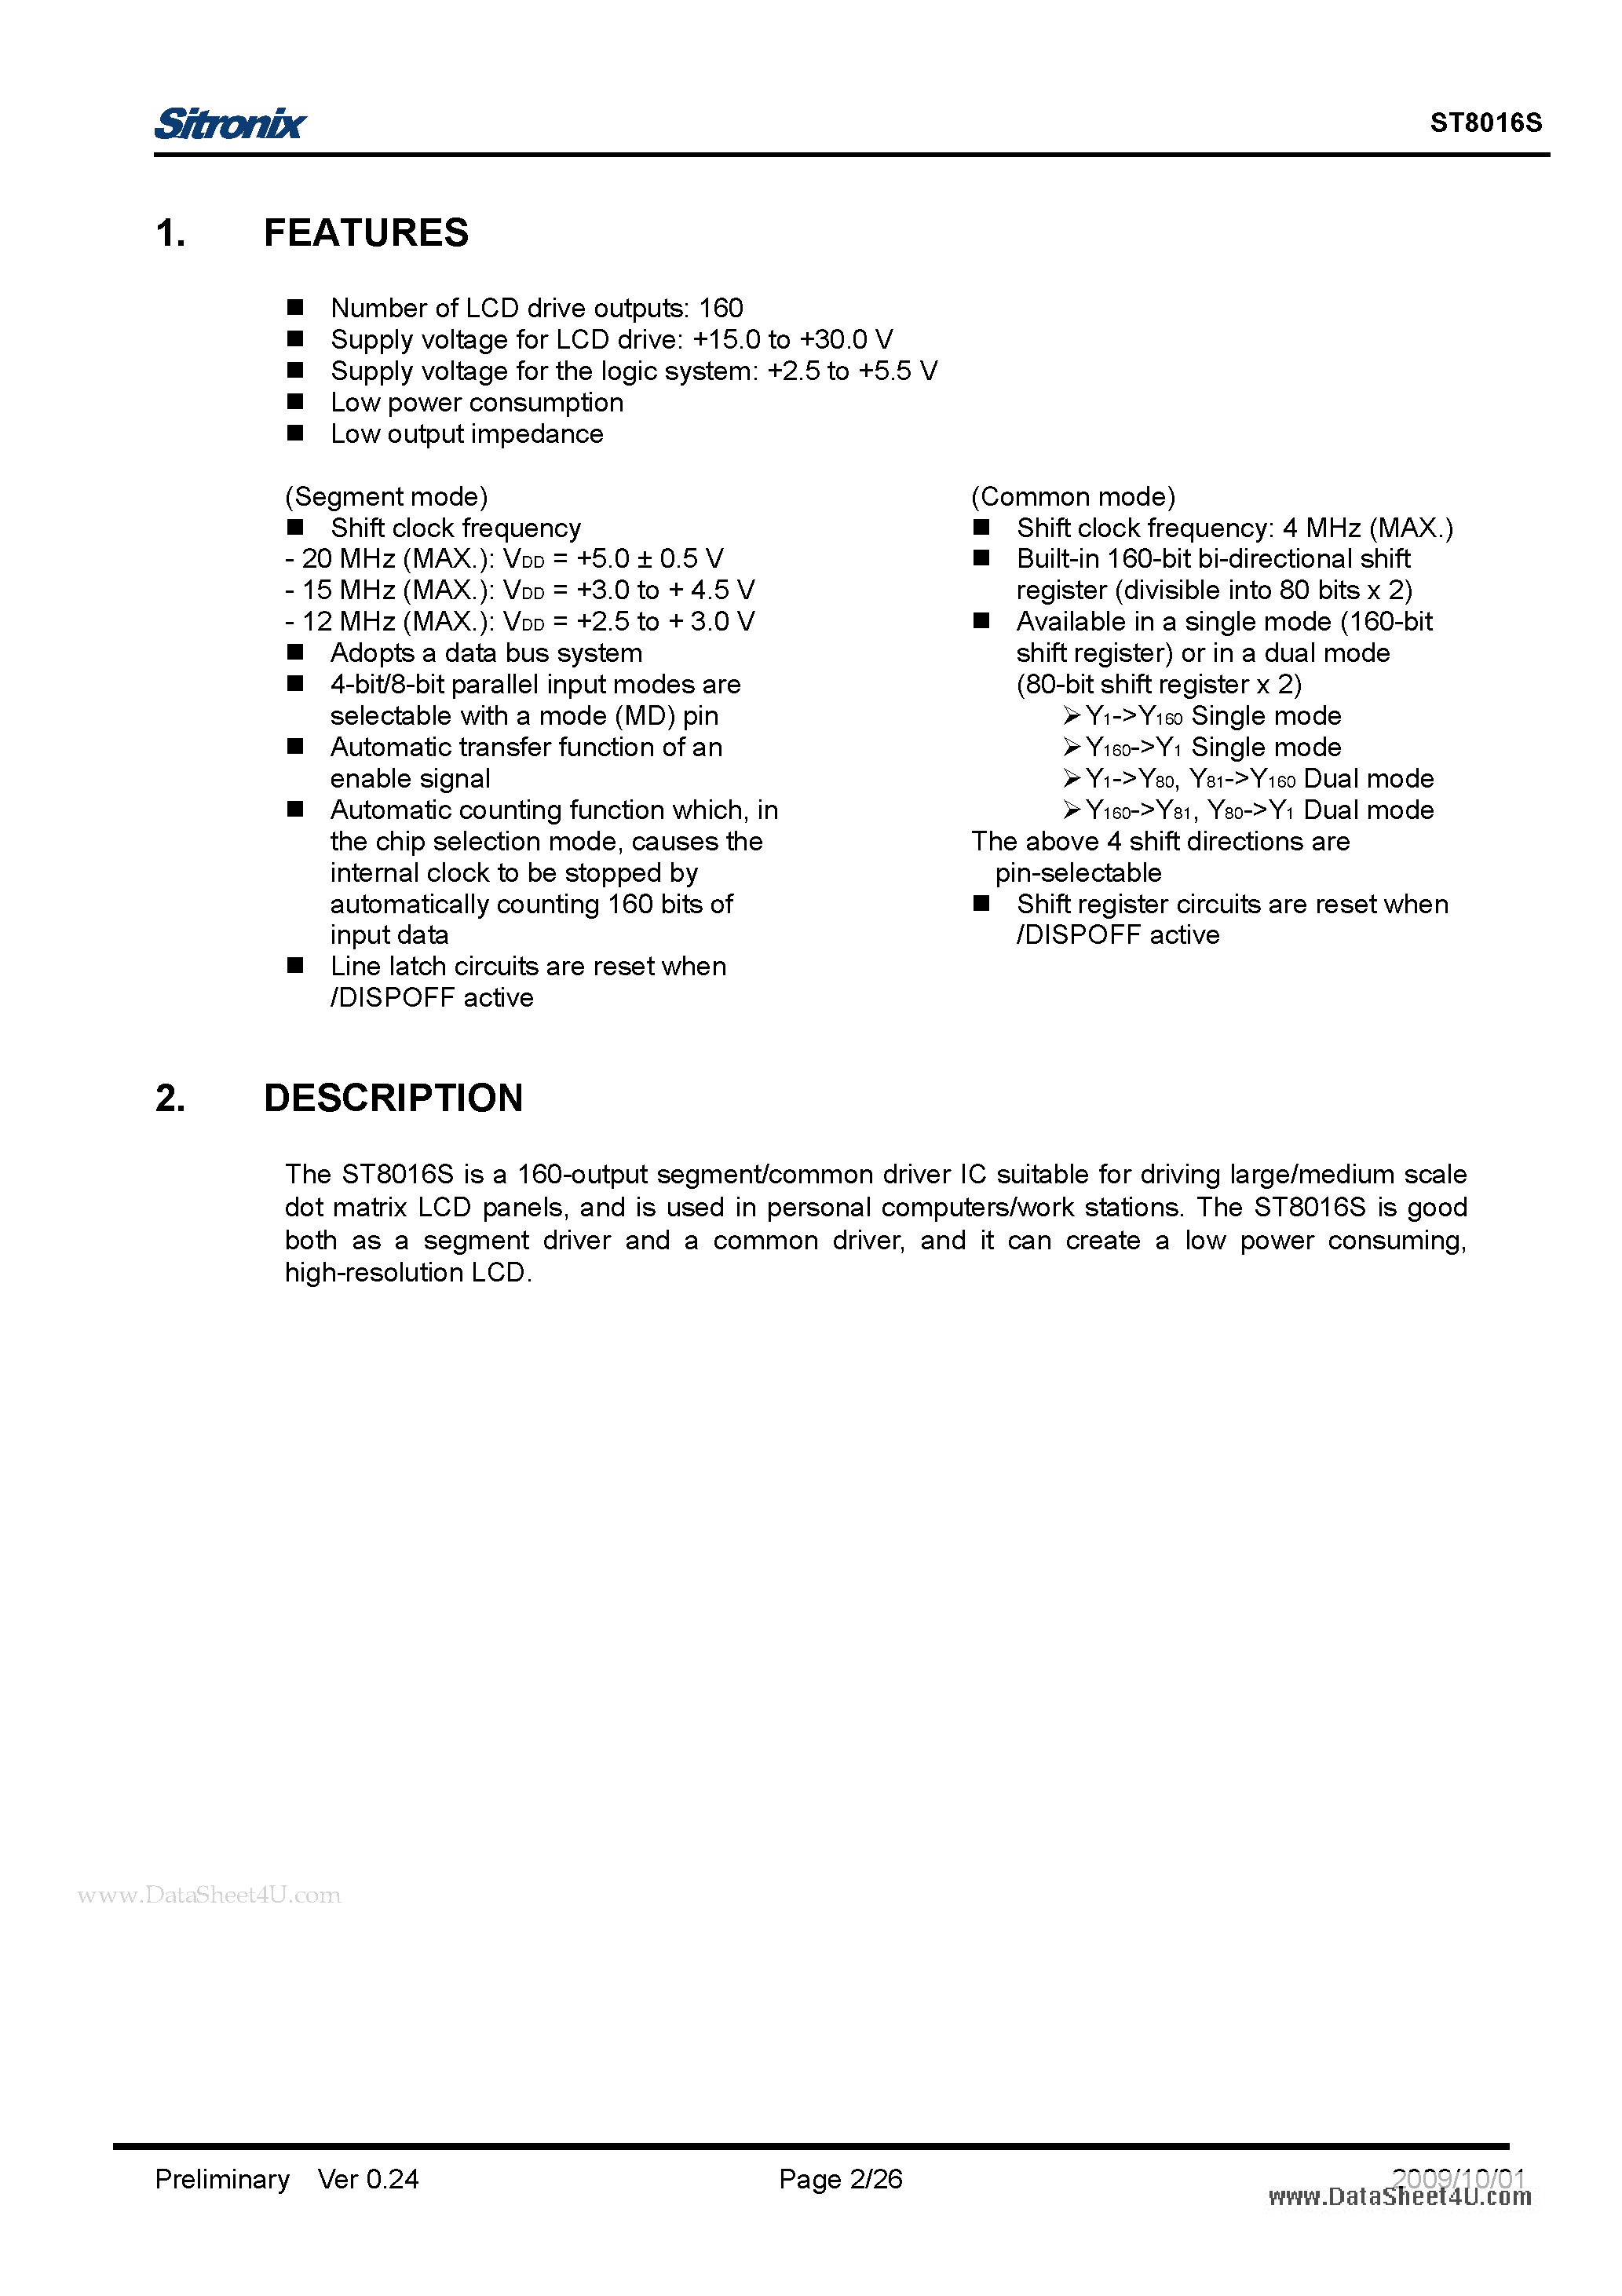 Datasheet ST8016S - COM/SEG LCD Driver page 2